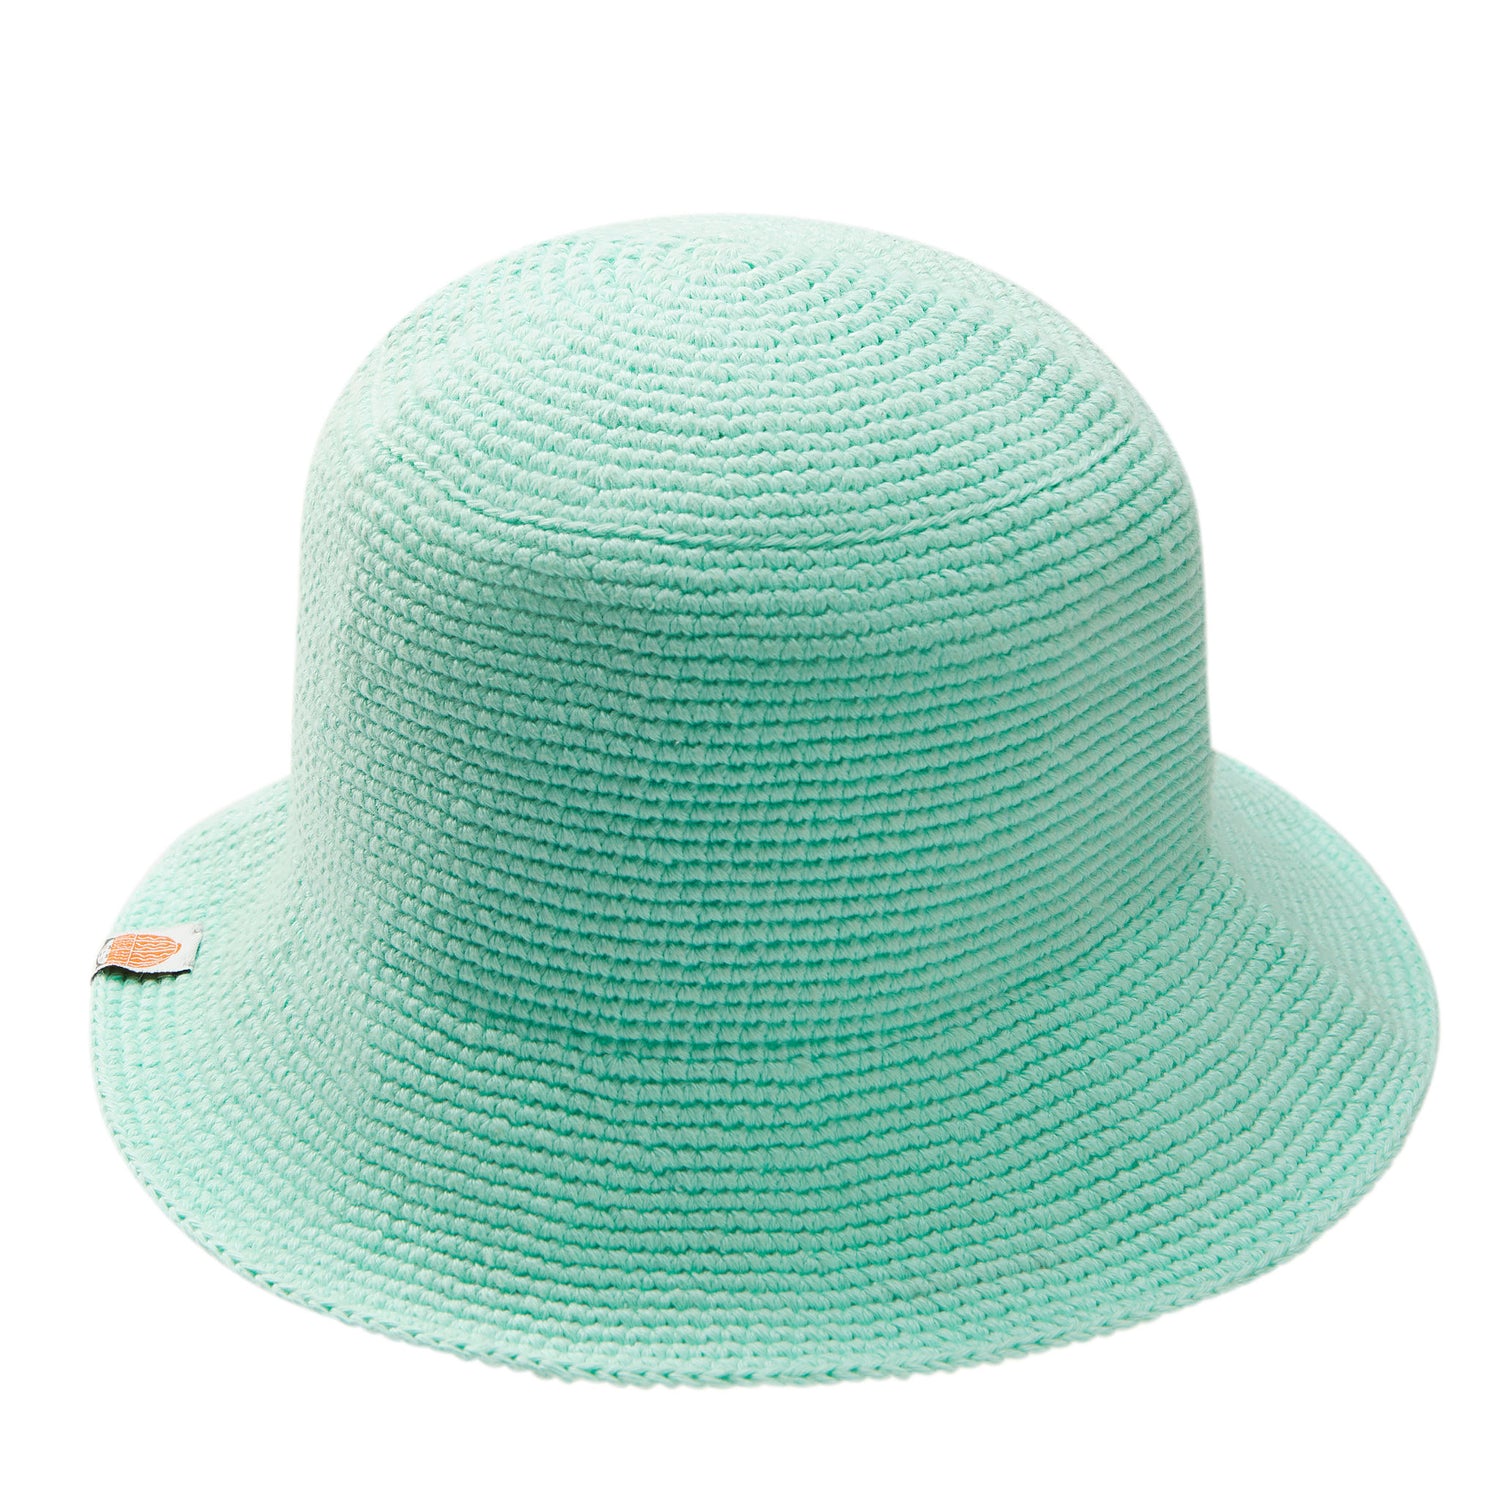 The Breton Bucket Hat